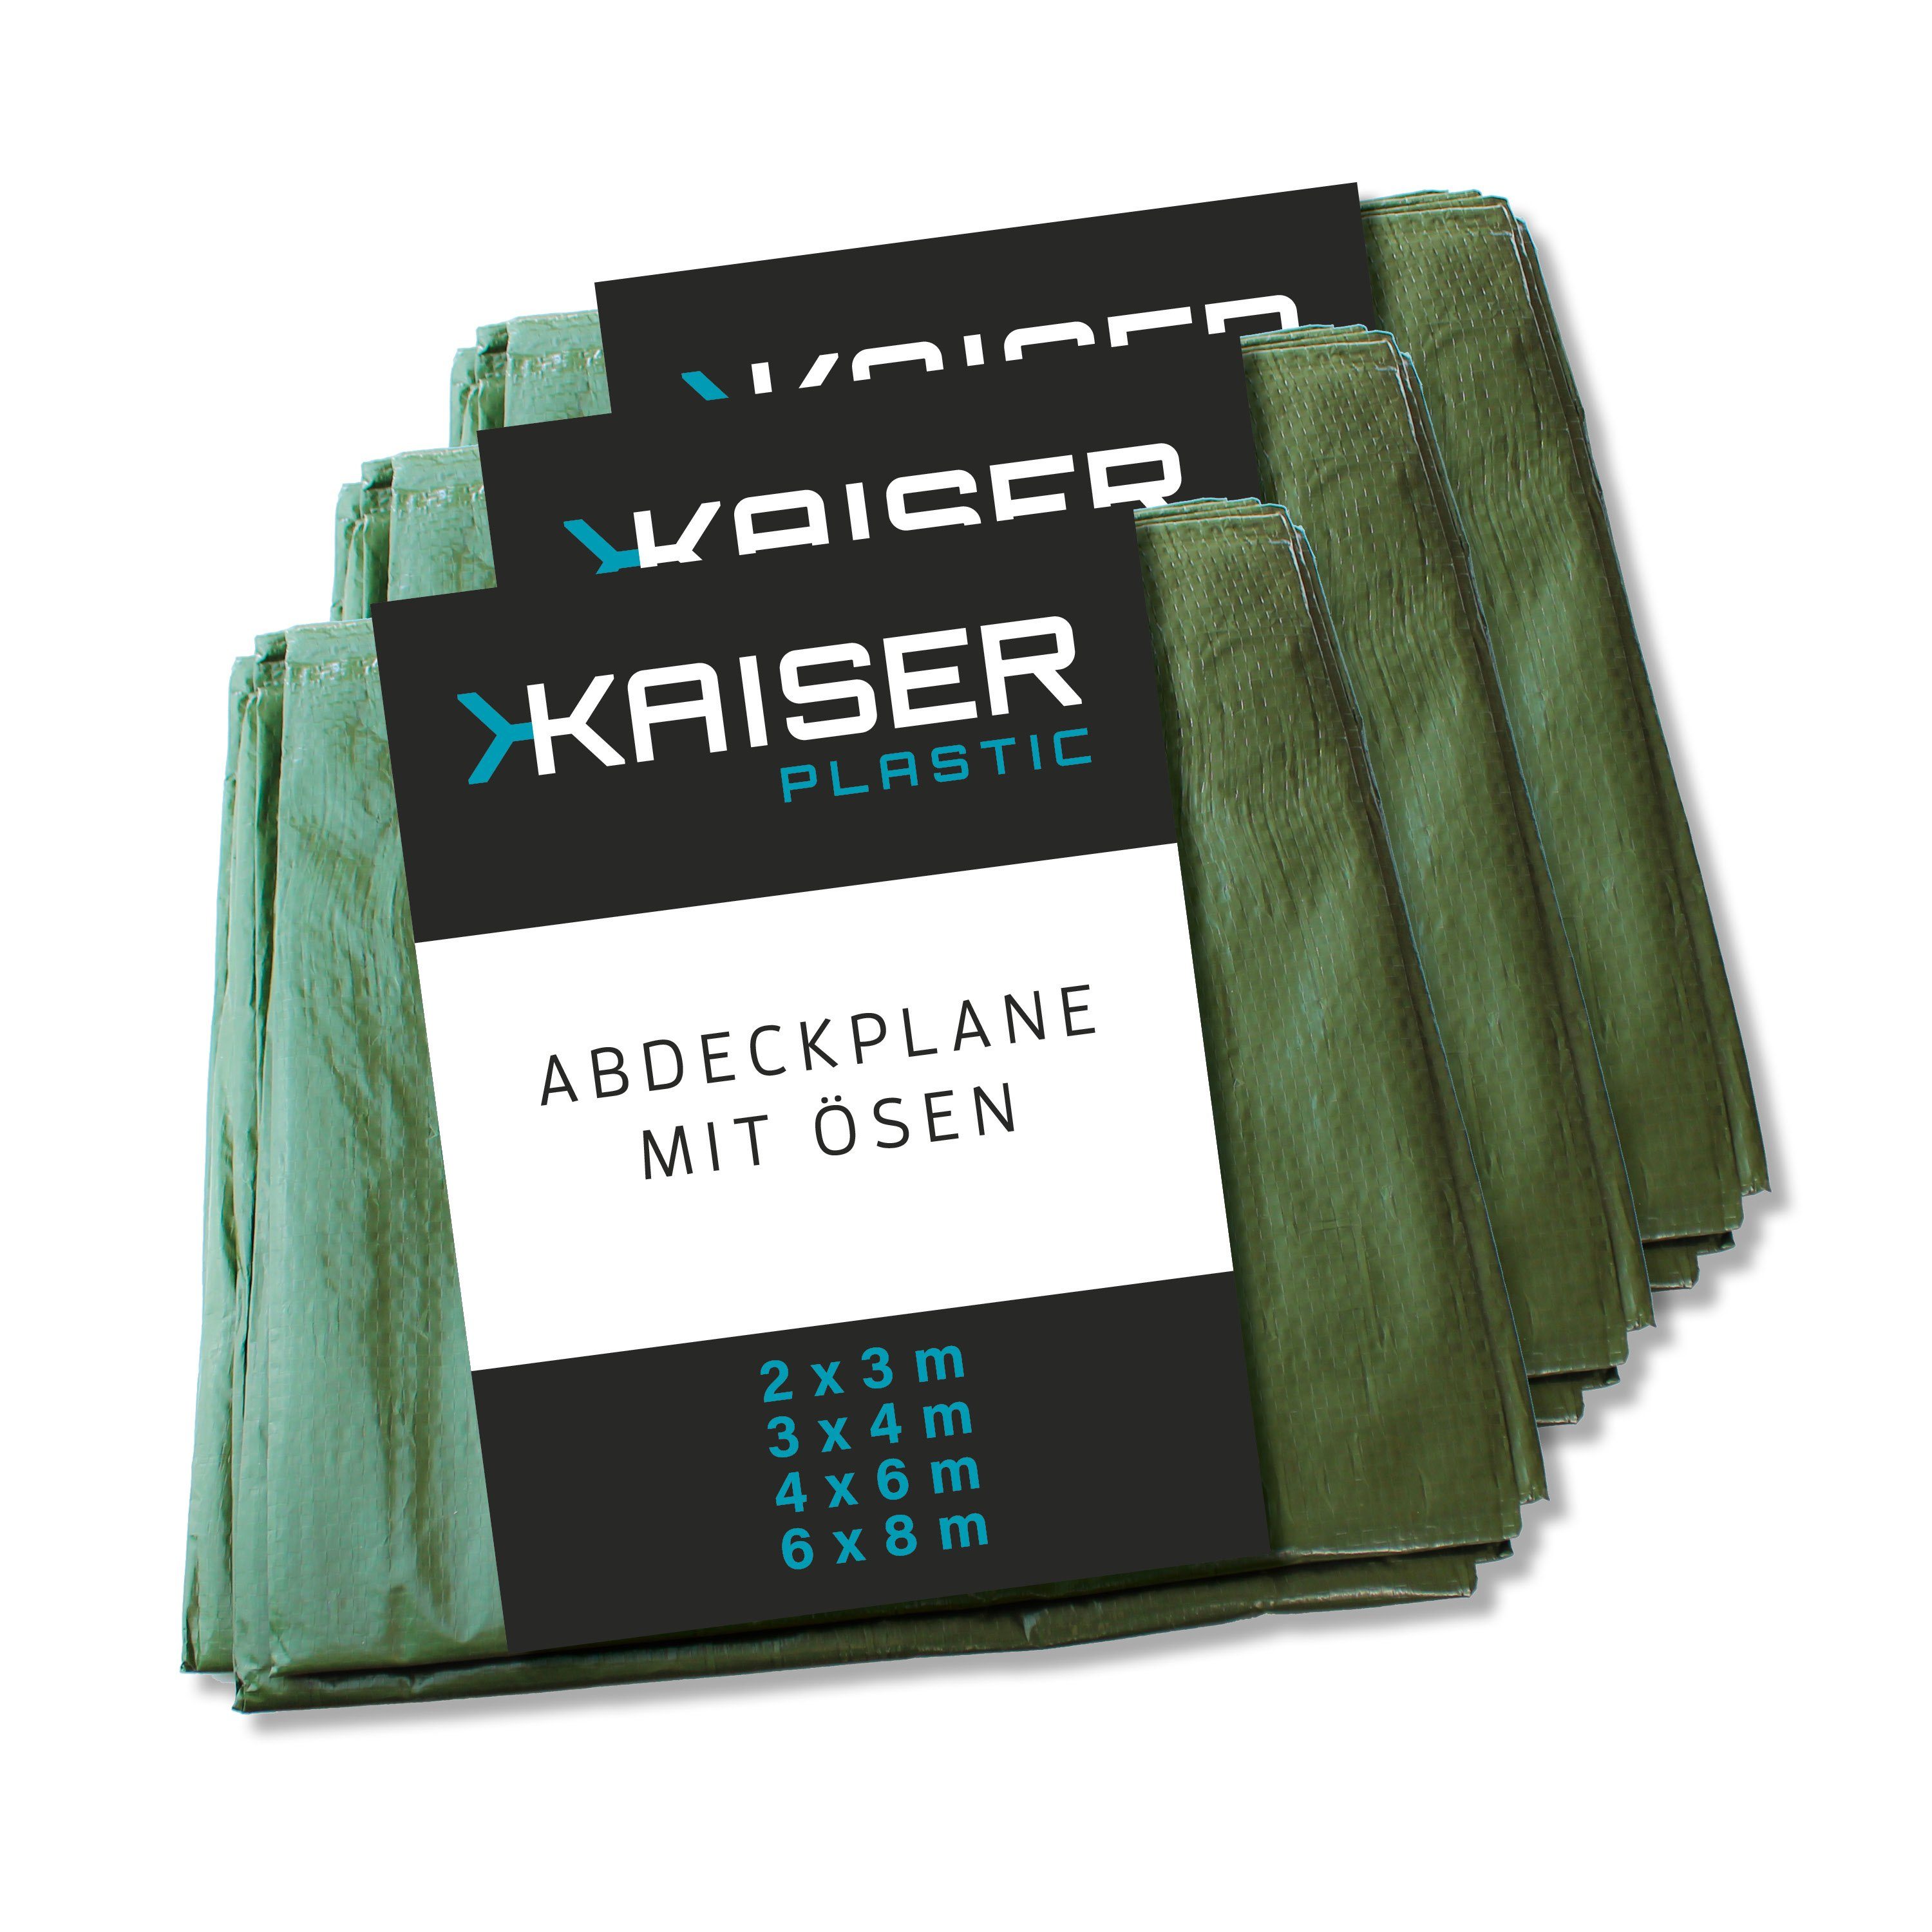 Kaiser plastic Schutzplane KAISER plastic Abdeckplane, Xtra Strong, 120g/m2